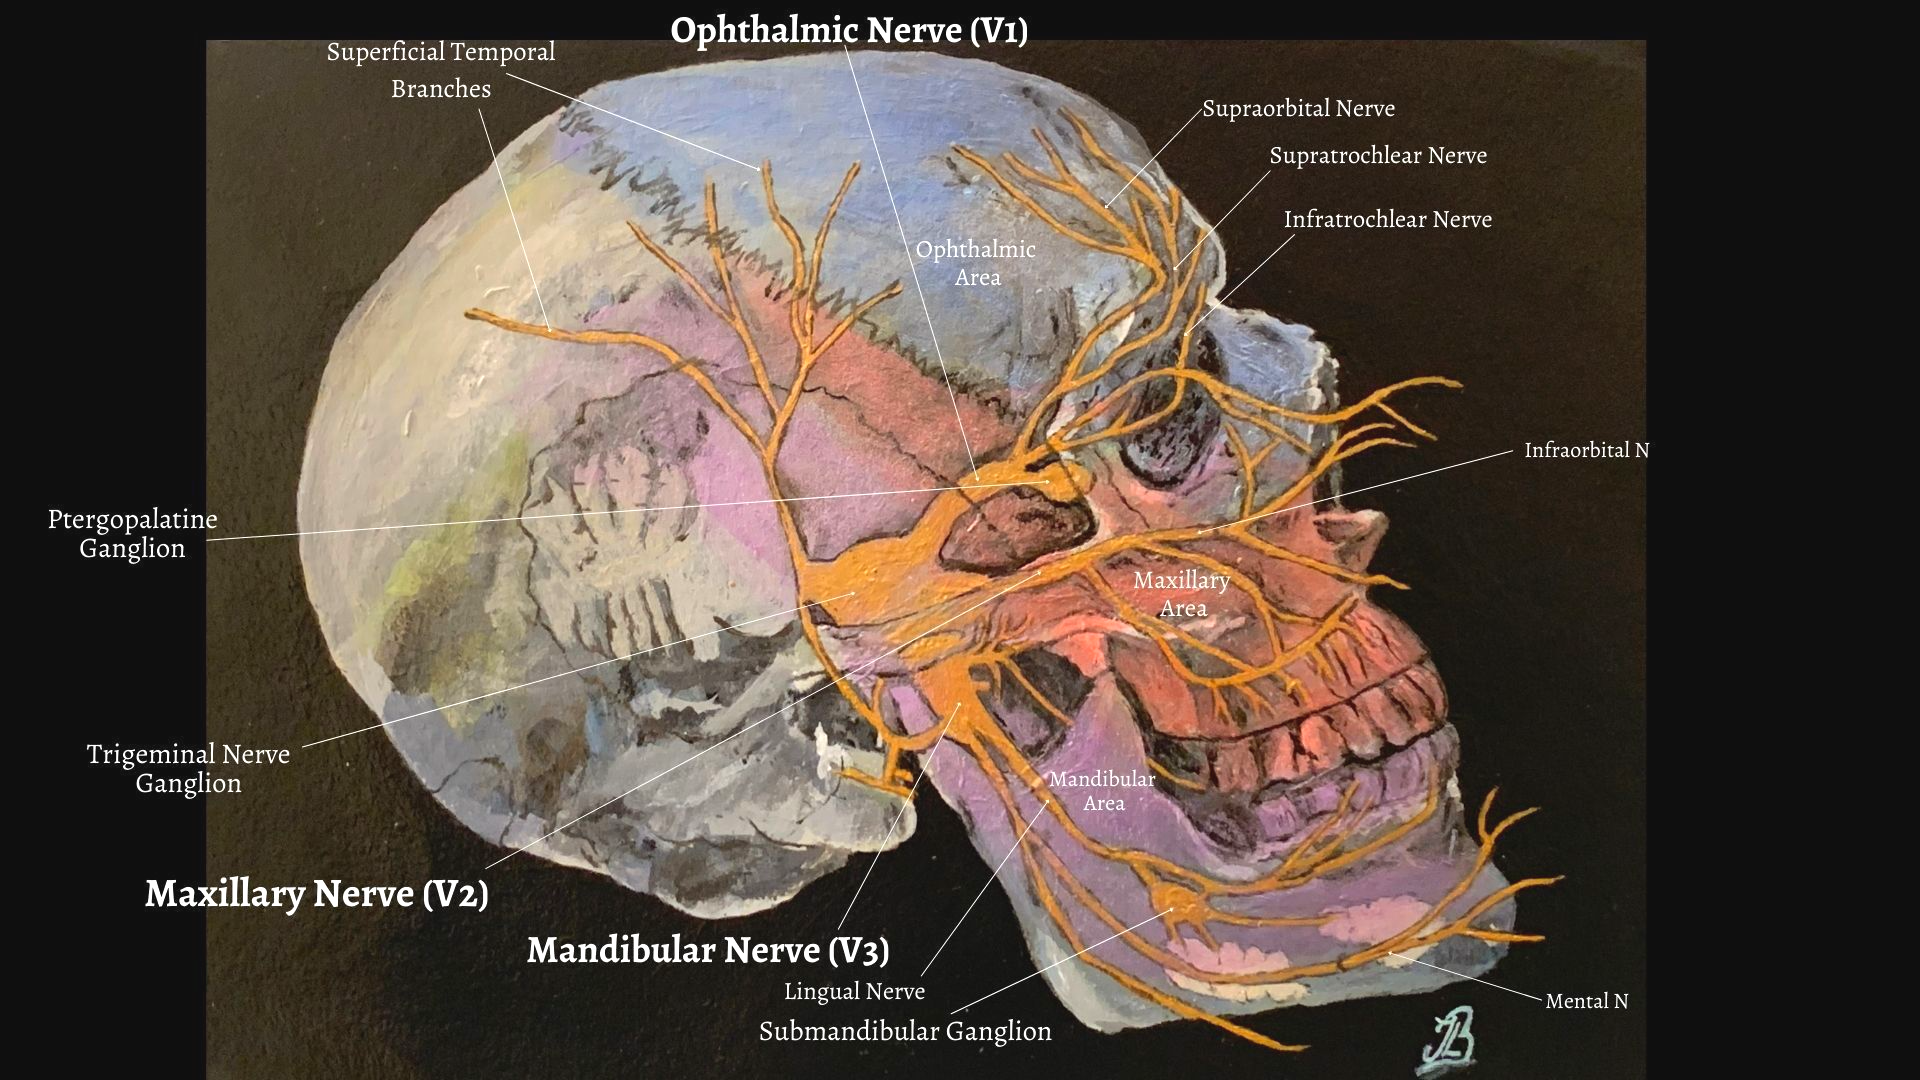 Skull showing the trigeminal nerve